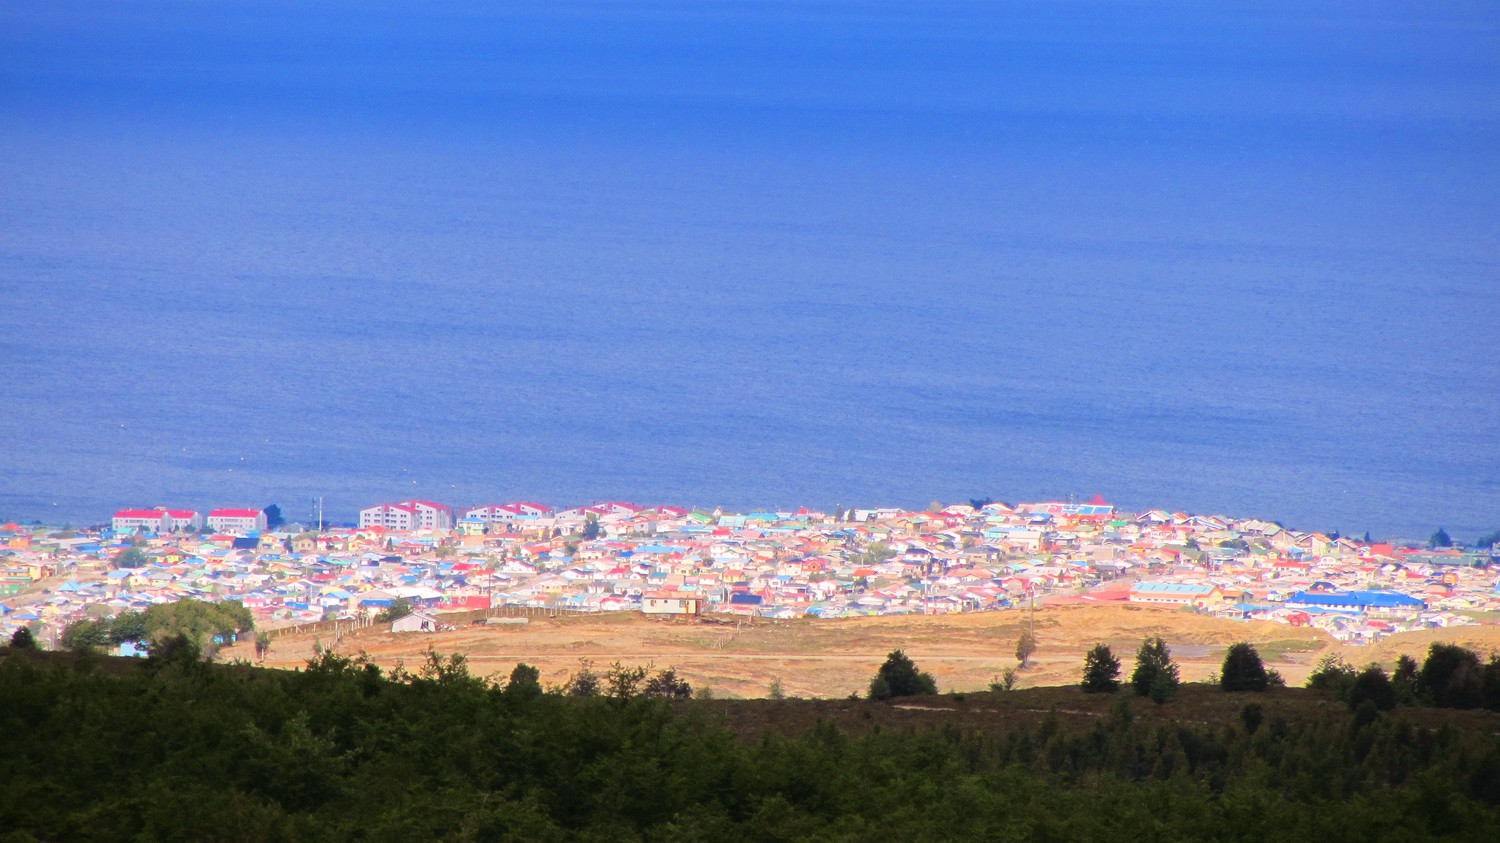 Punta Arenas seen from the Mirador close to Monte Fewton